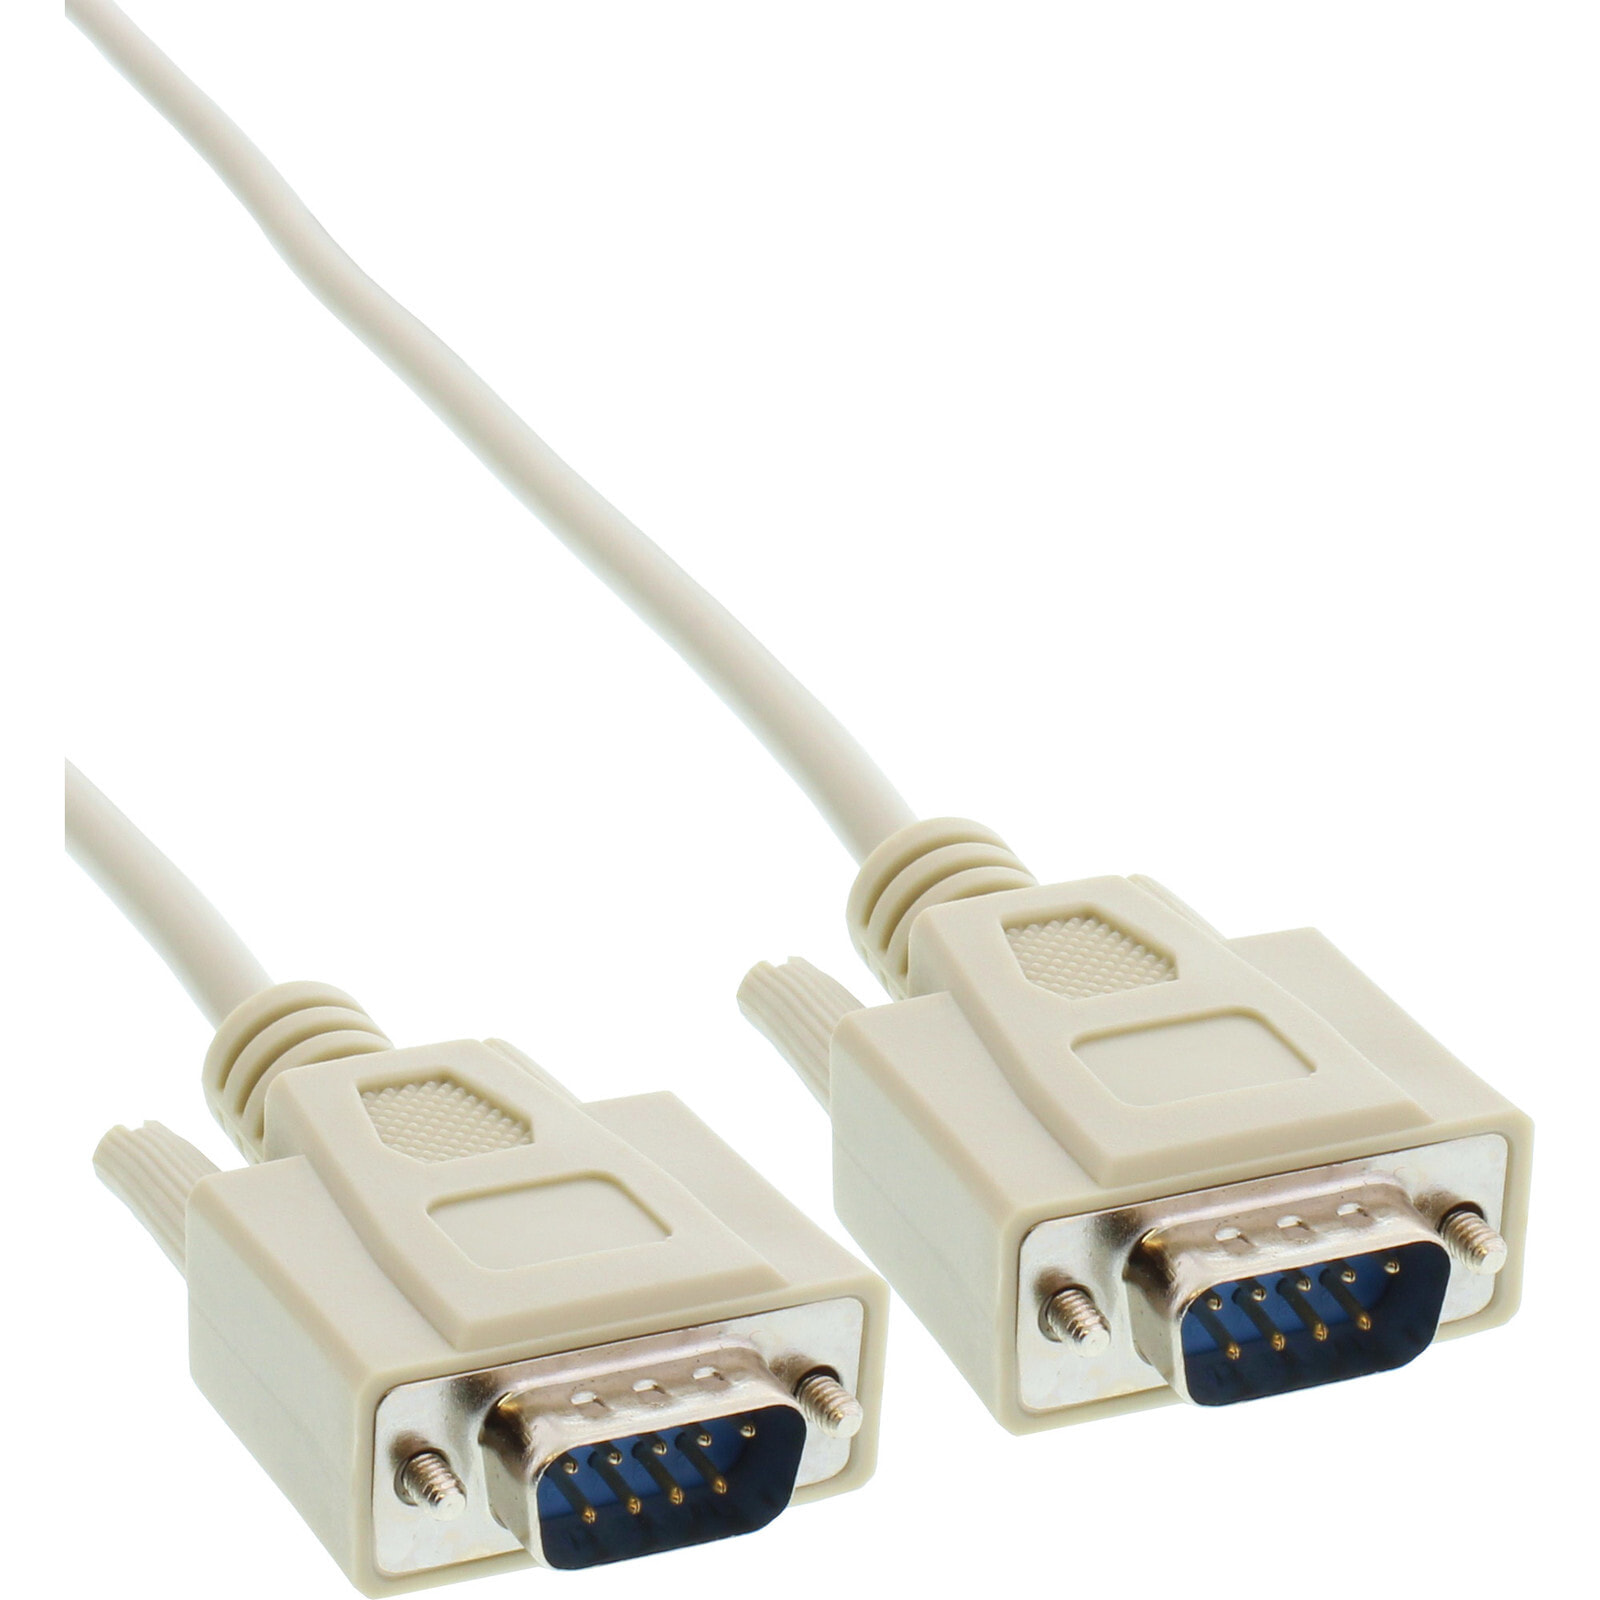 InLine Serial cable DB9 M/M 3m кабель последовательной связи Серый male 9pin Sub D 12213